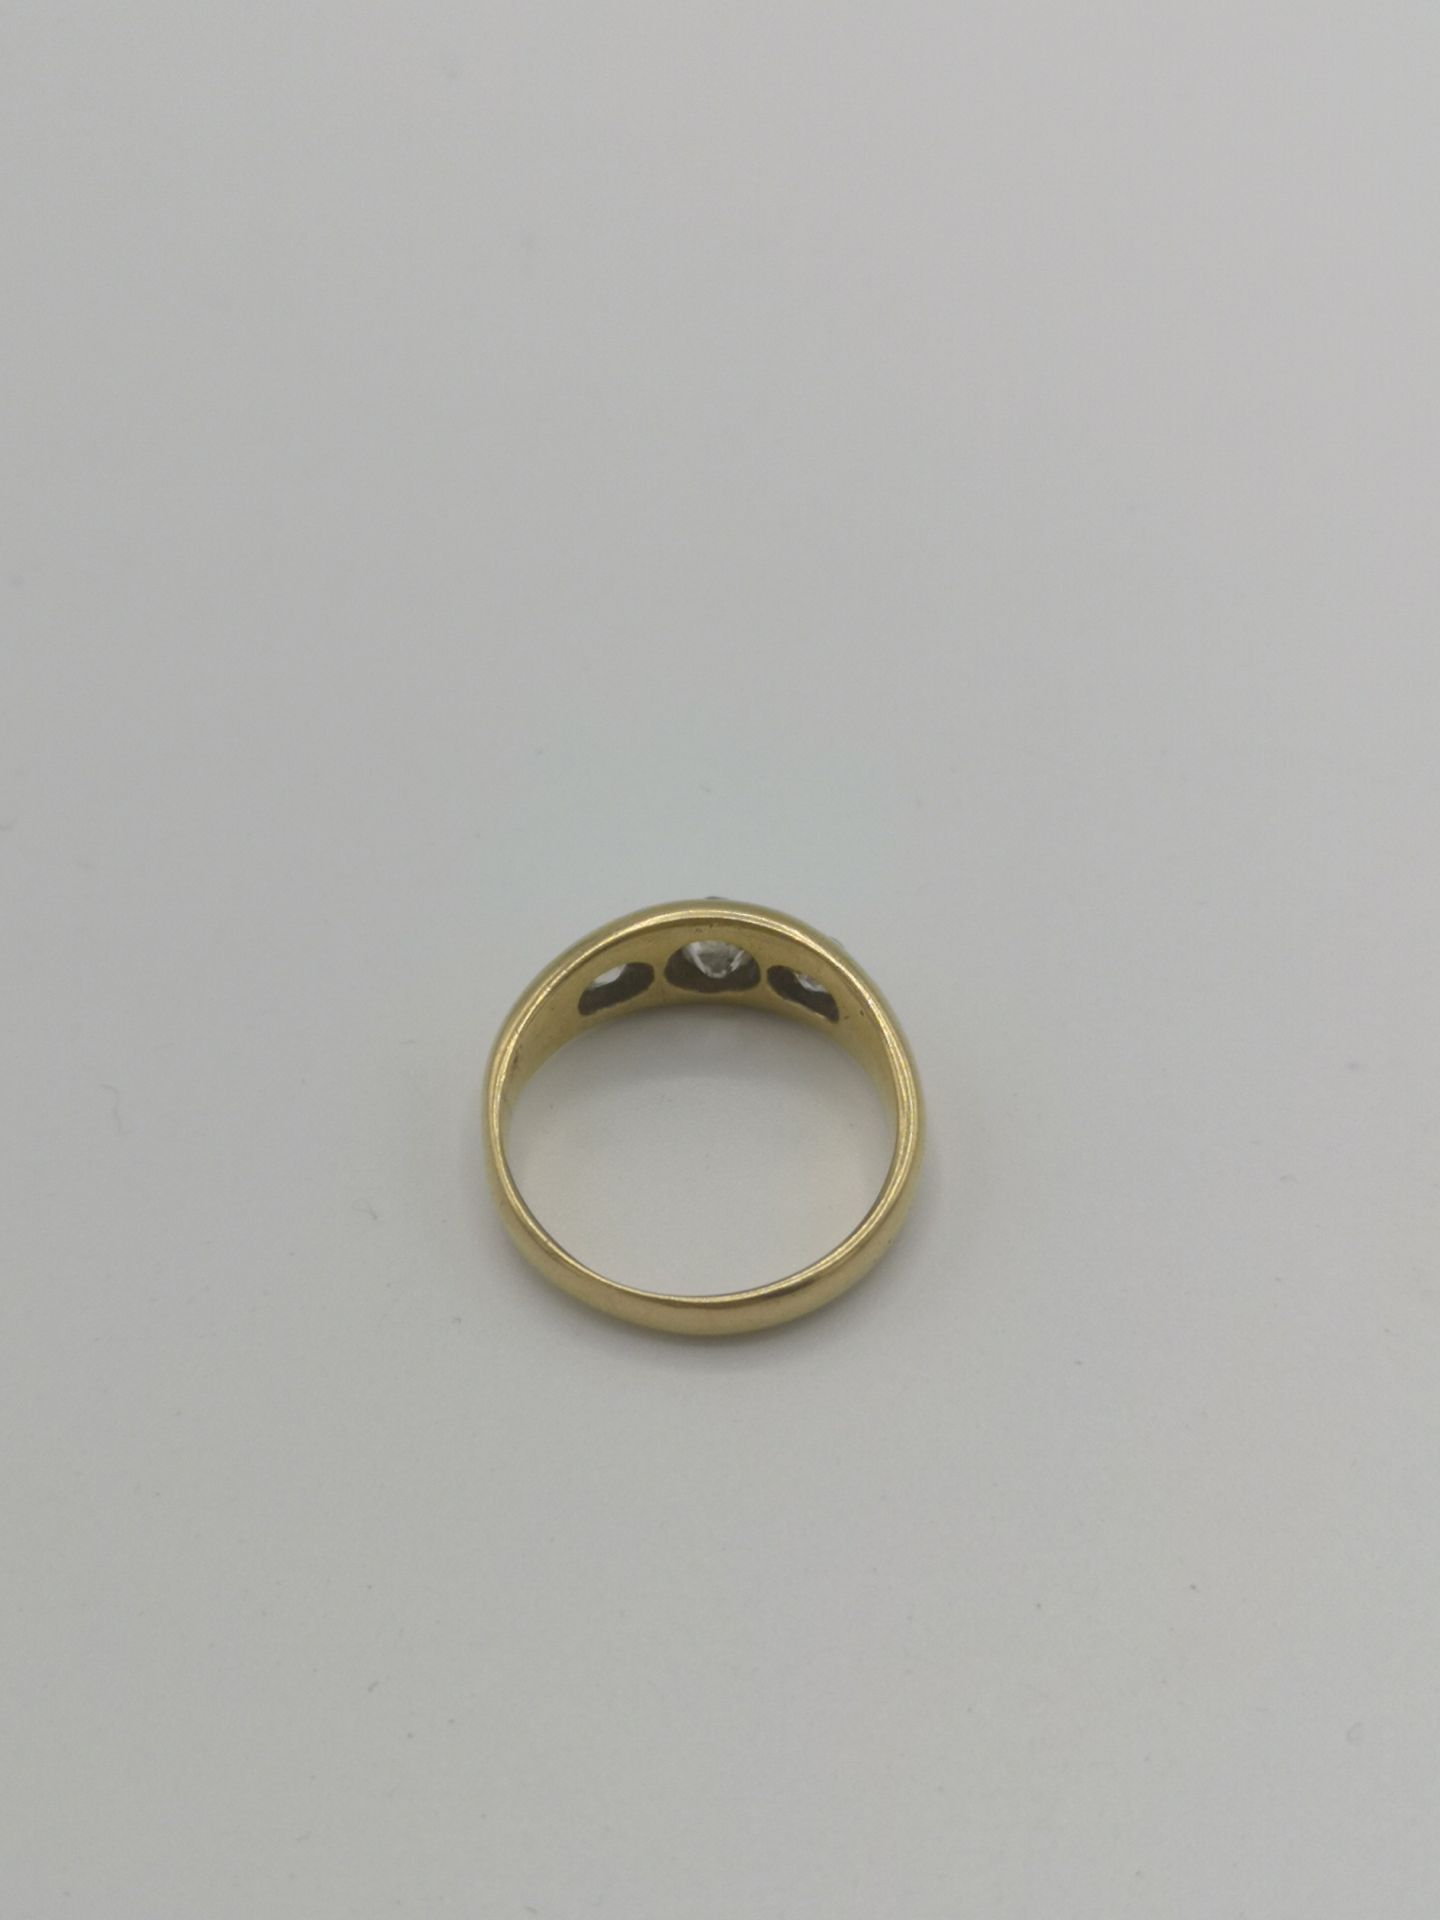 18ct gold ring set with three diamonds - Image 4 of 5